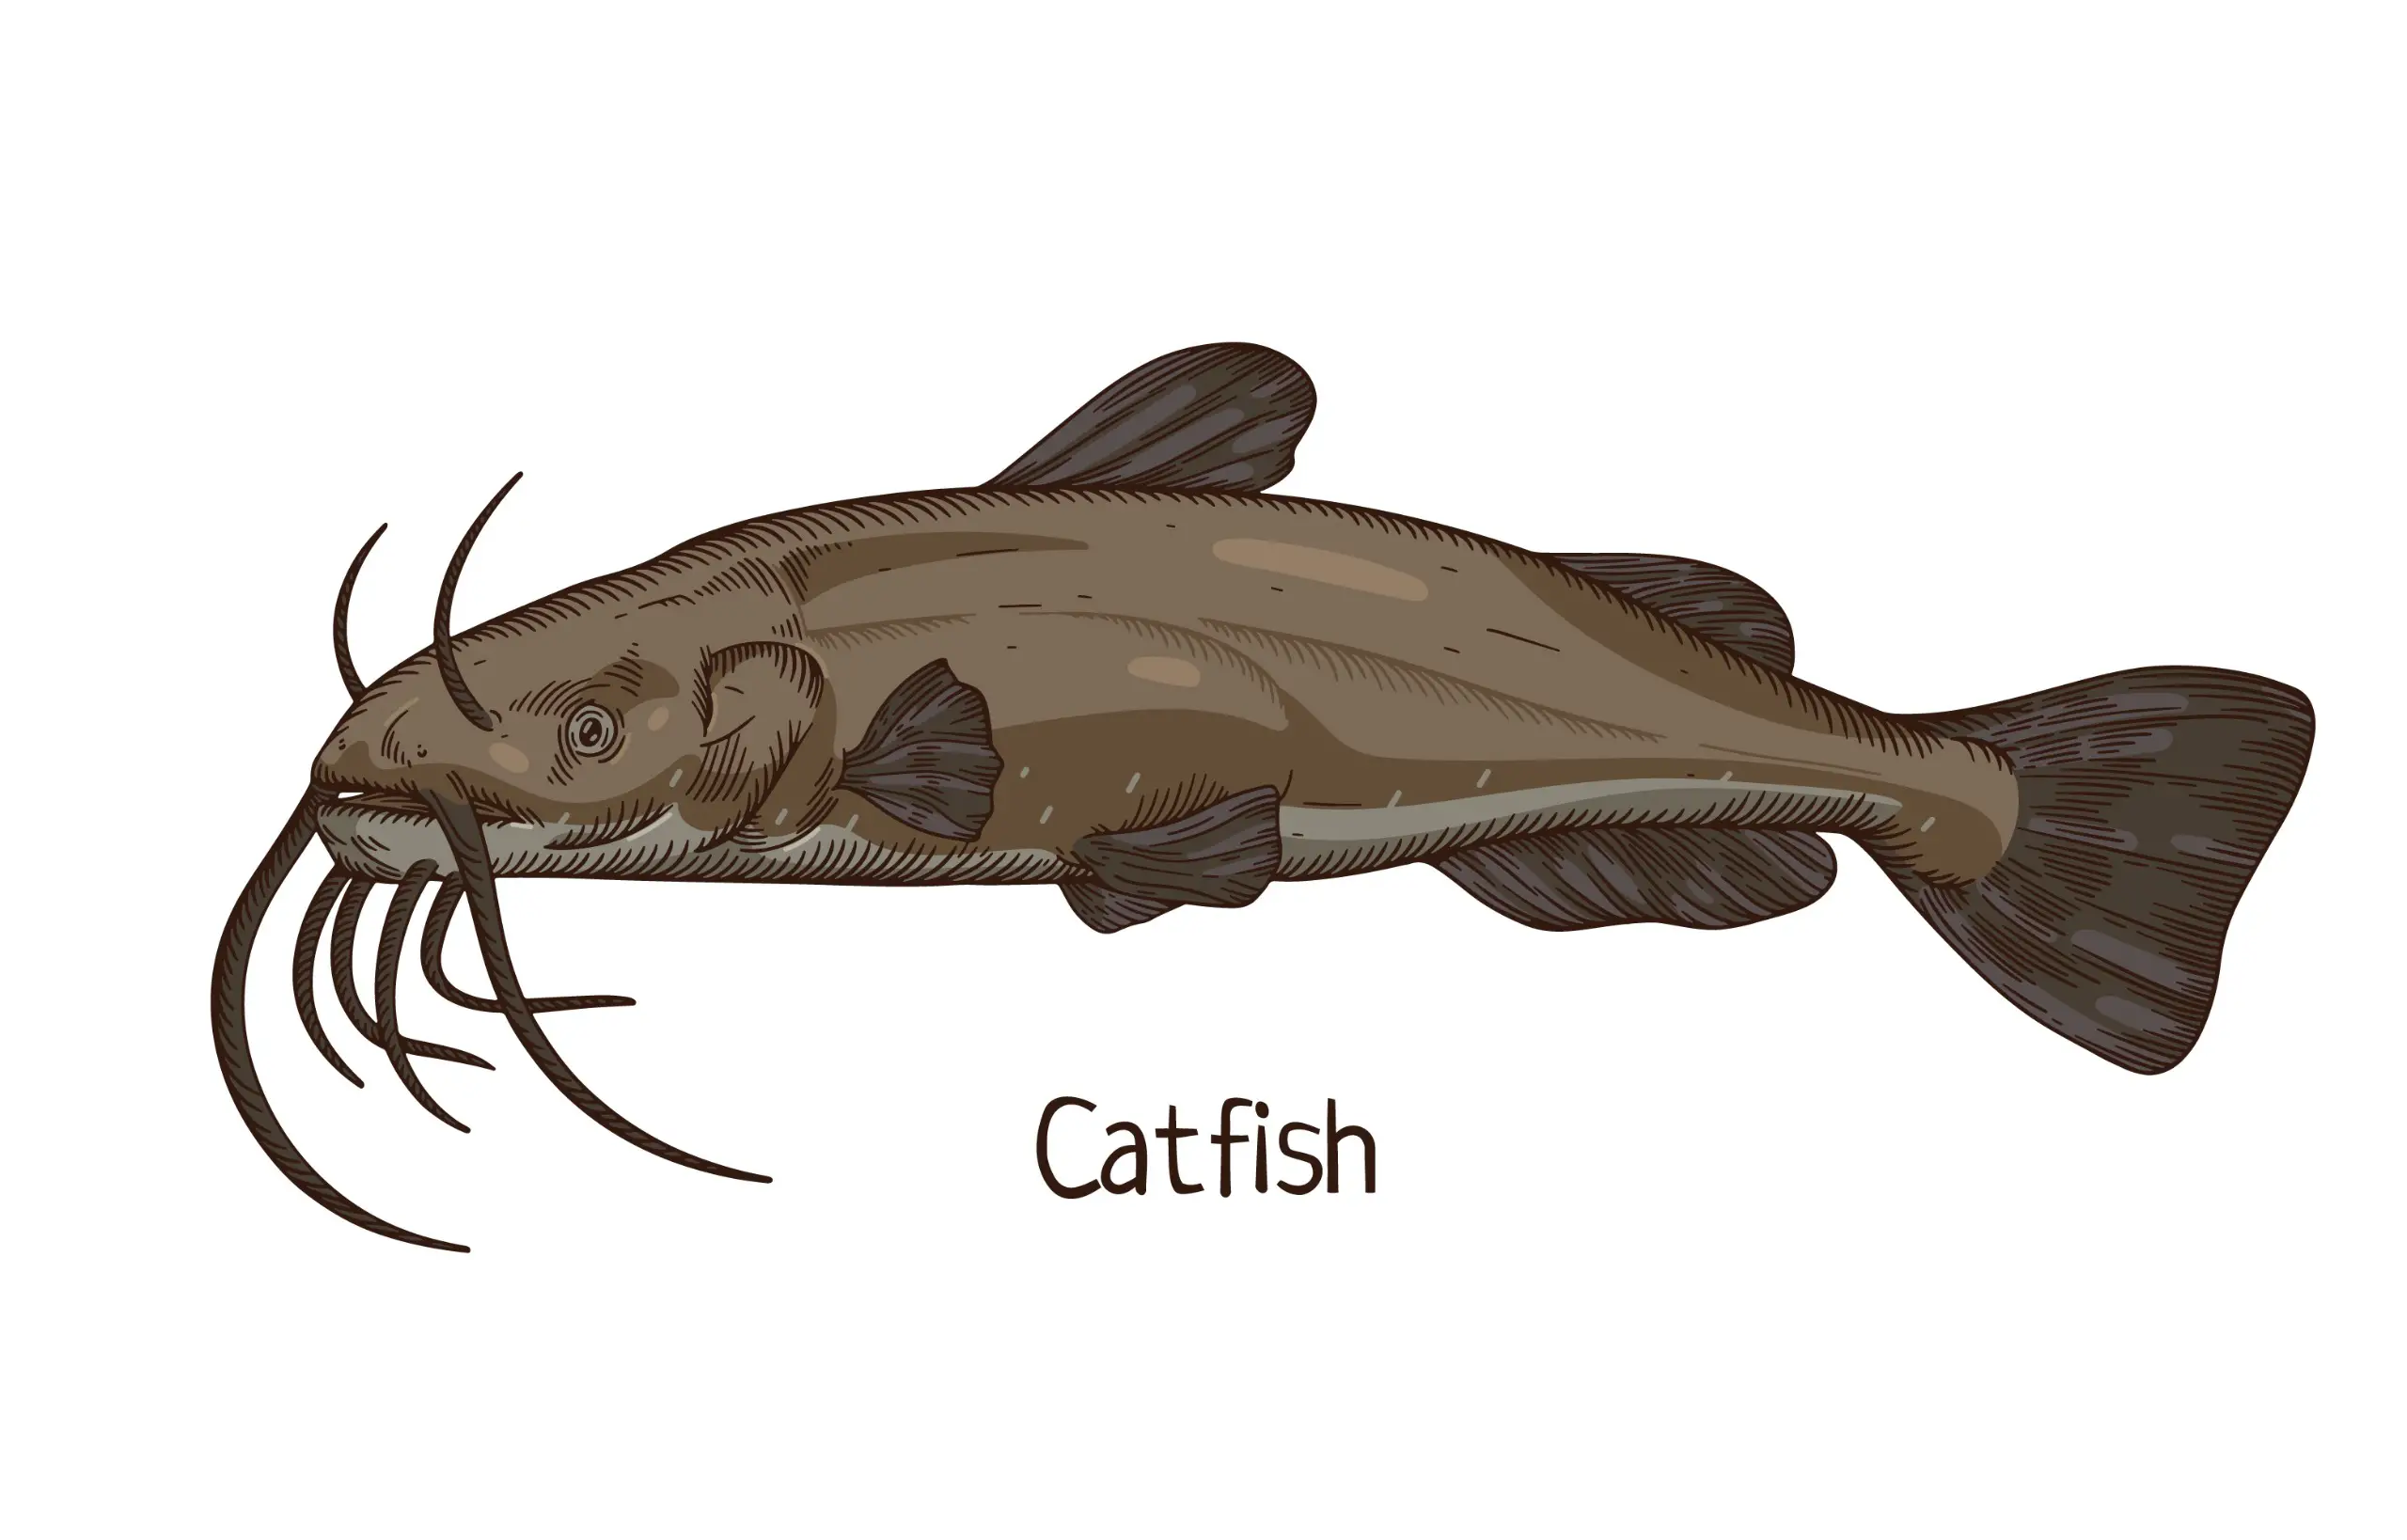 Catfish illustration with big barbels